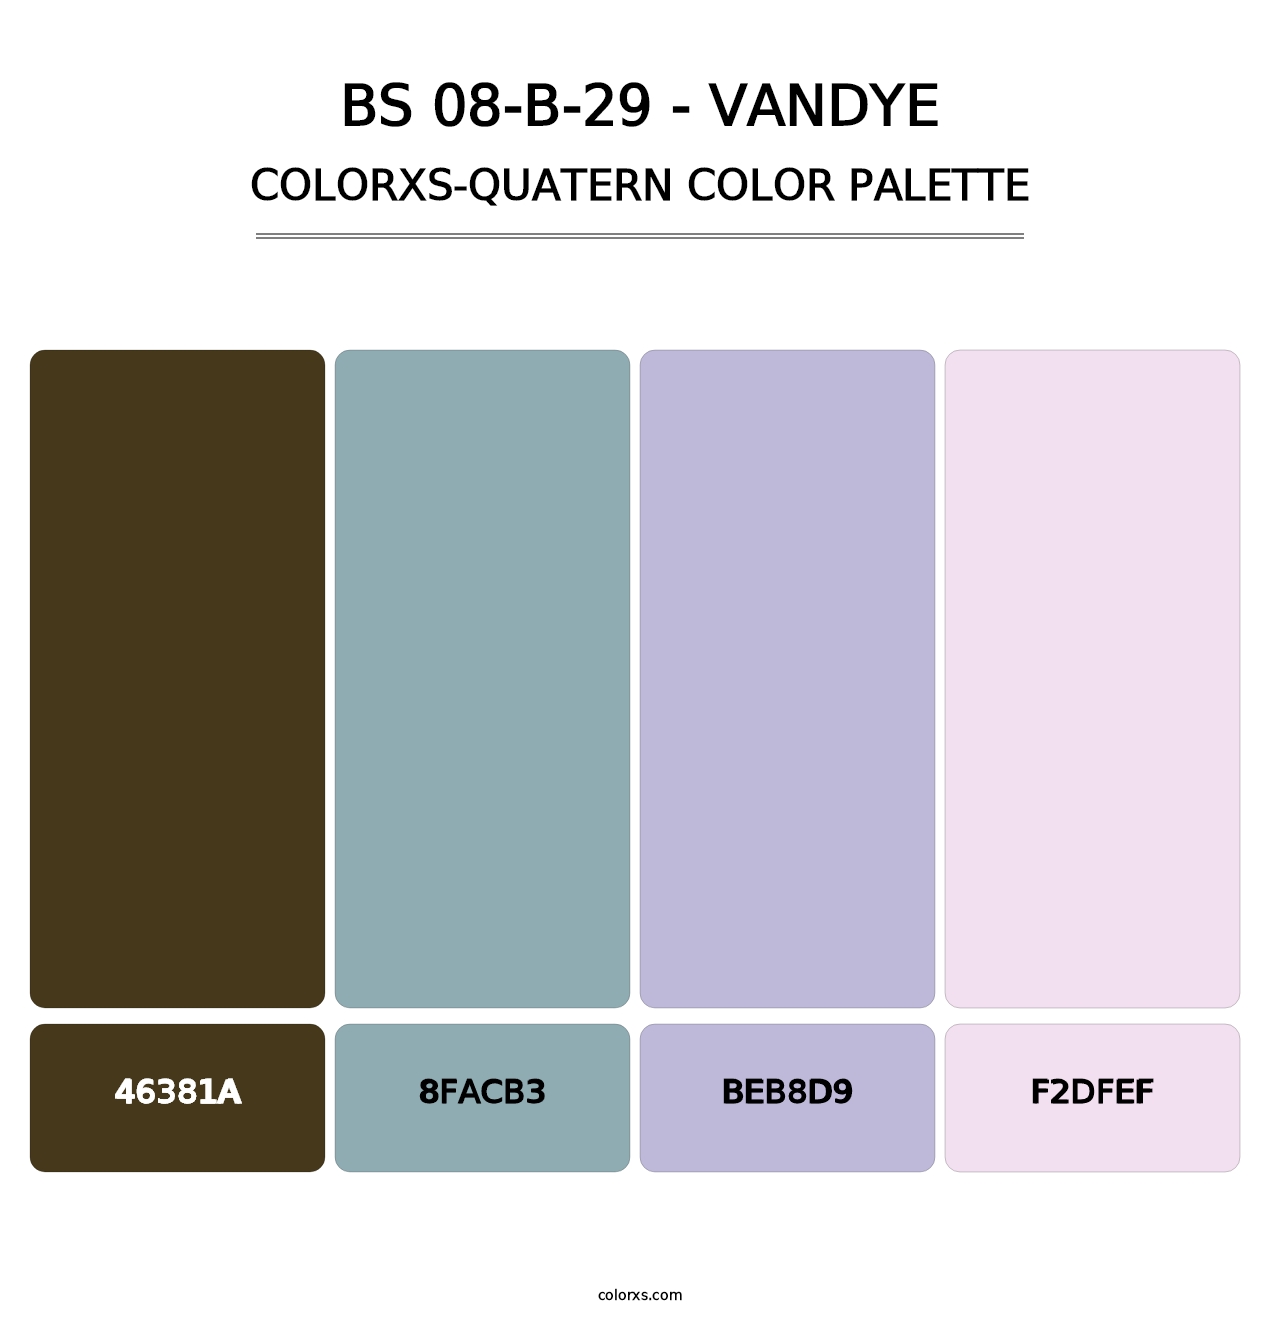 BS 08-B-29 - Vandye - Colorxs Quatern Palette